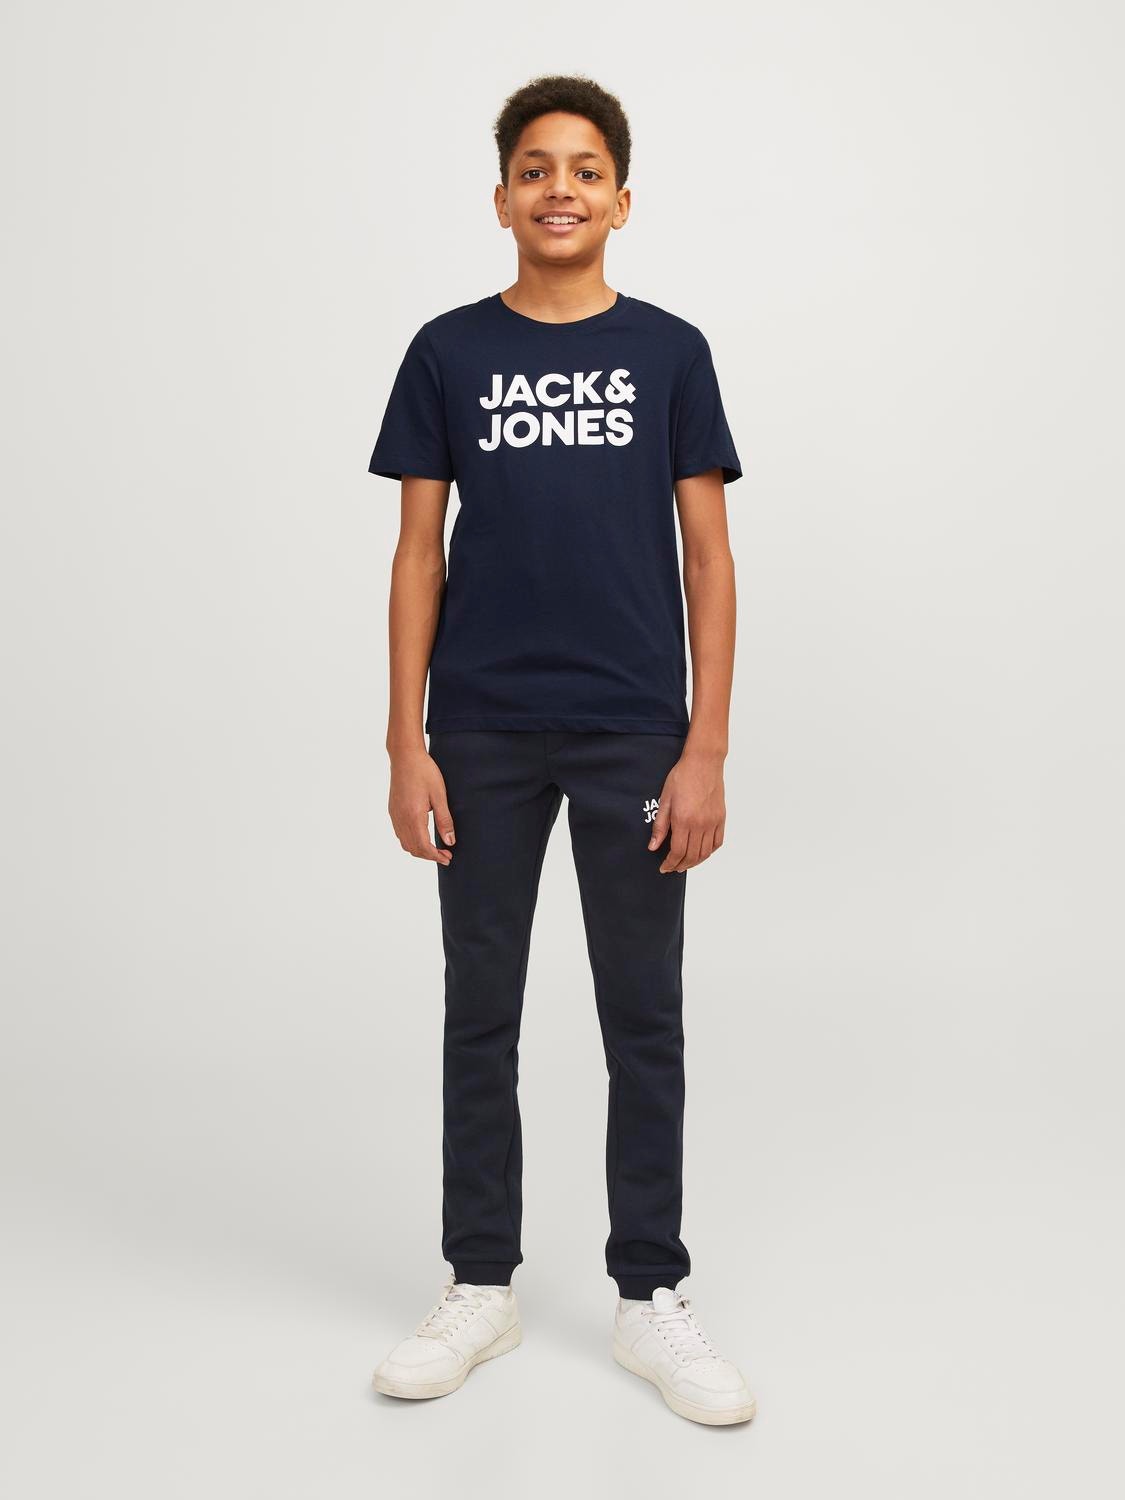 Jack & Jones Logo T-shirt Junior -Navy Blazer - 12152730